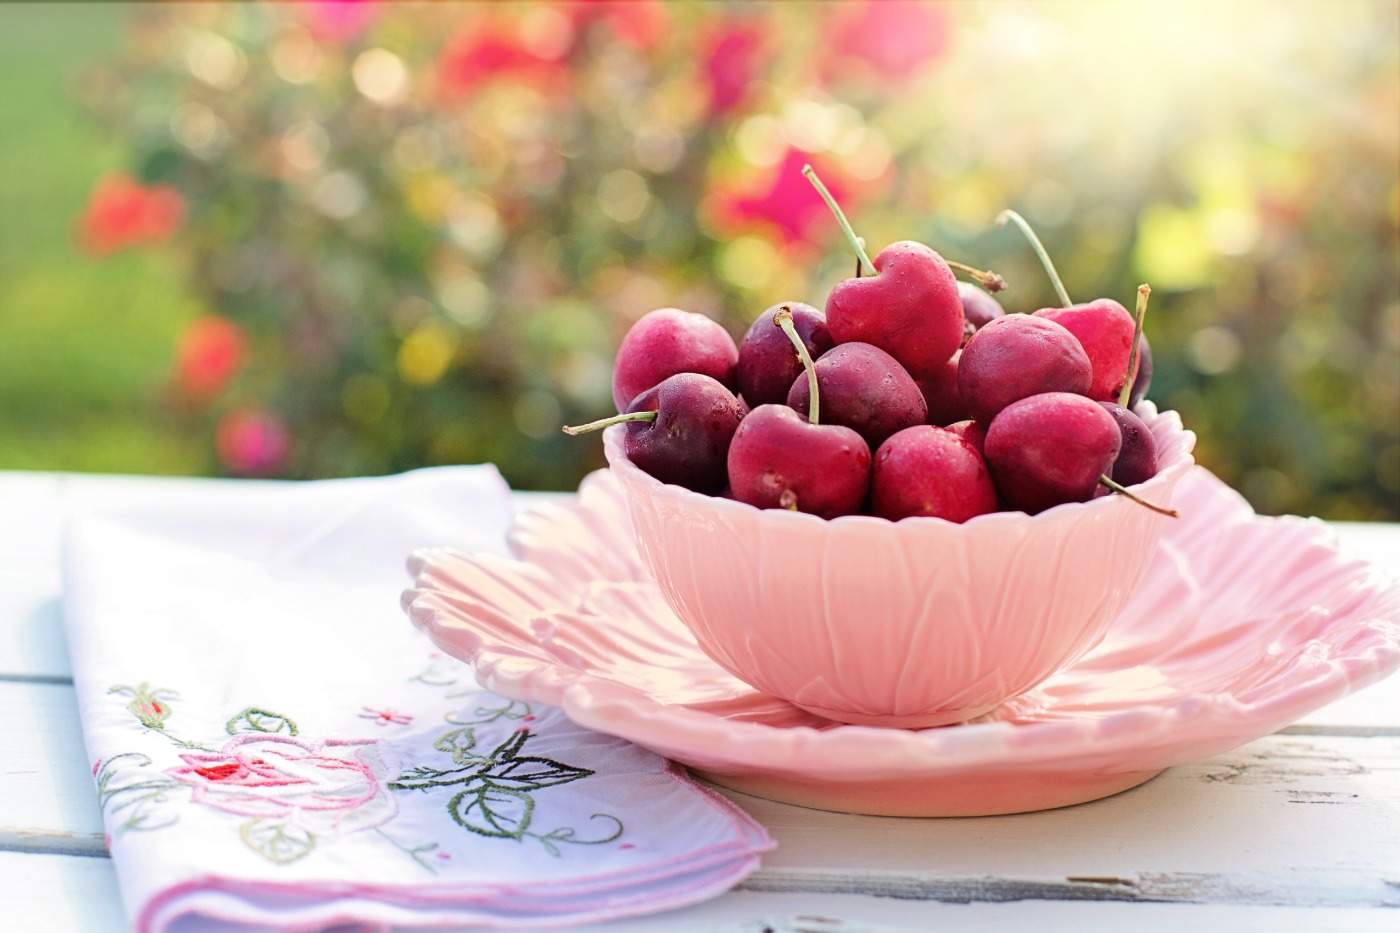 fresh cherries in rosafarbener schüssel on some heat in the heat tag